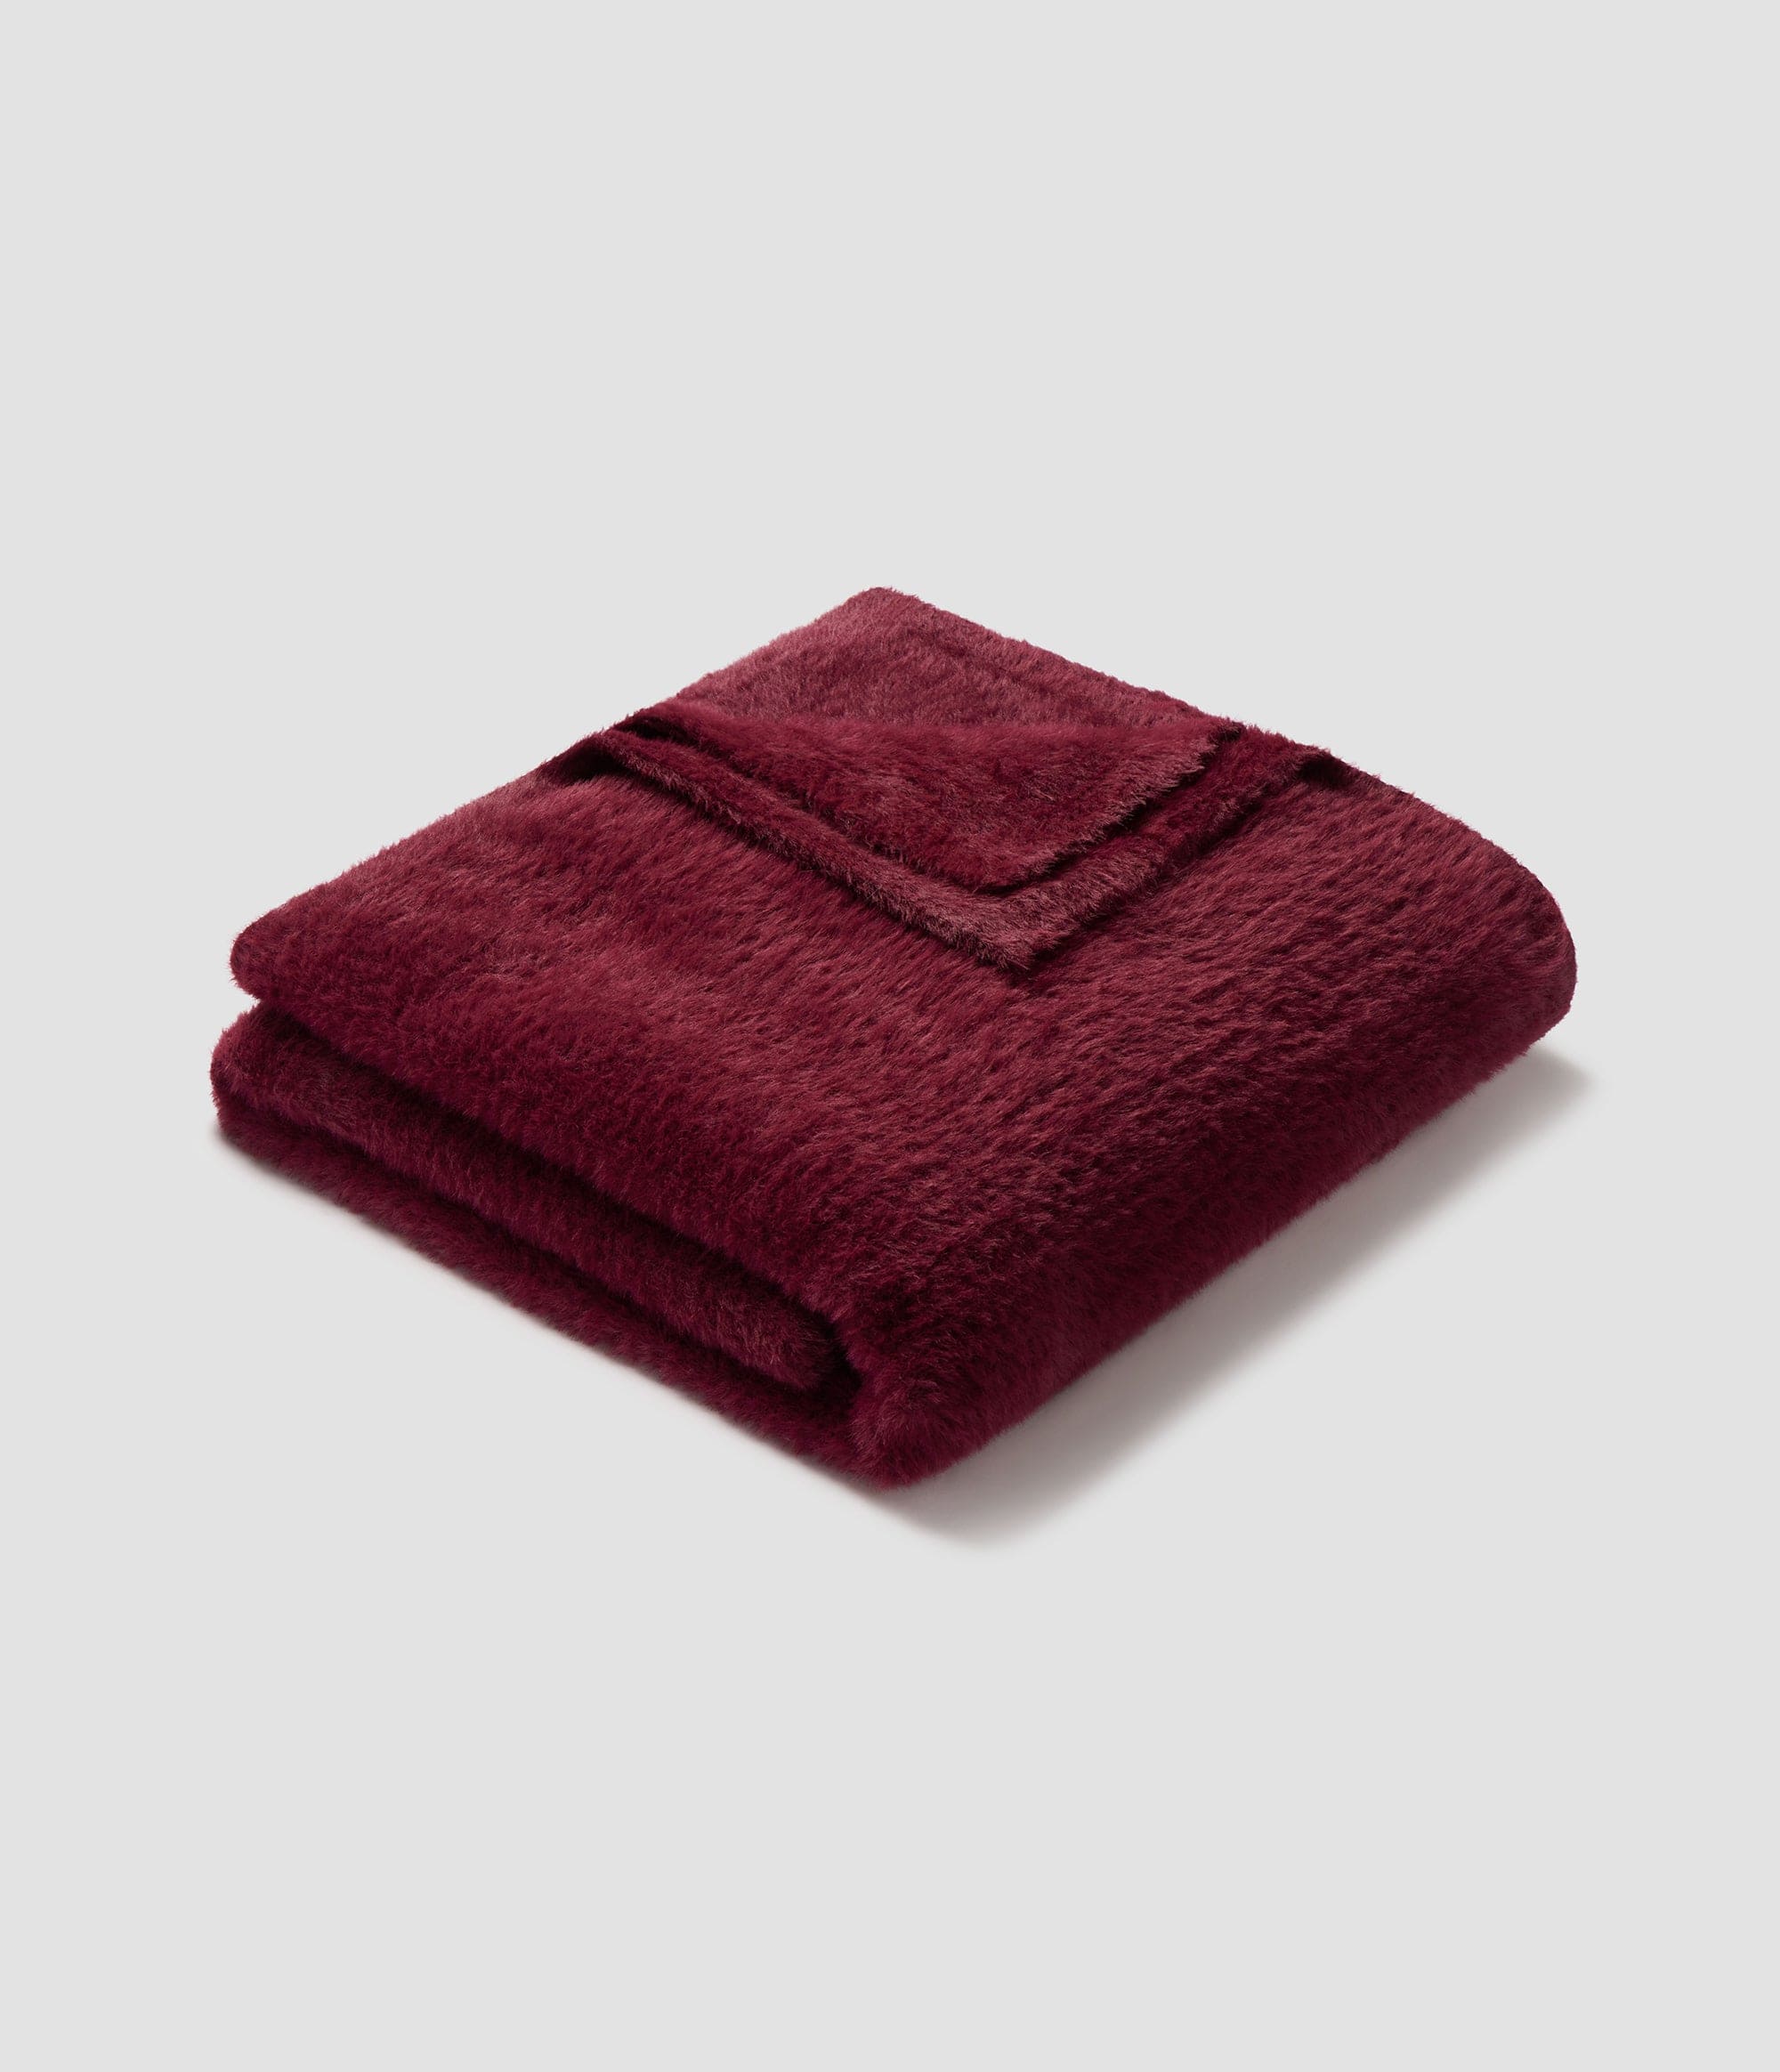 Feather Knit Blanket - Bordeaux